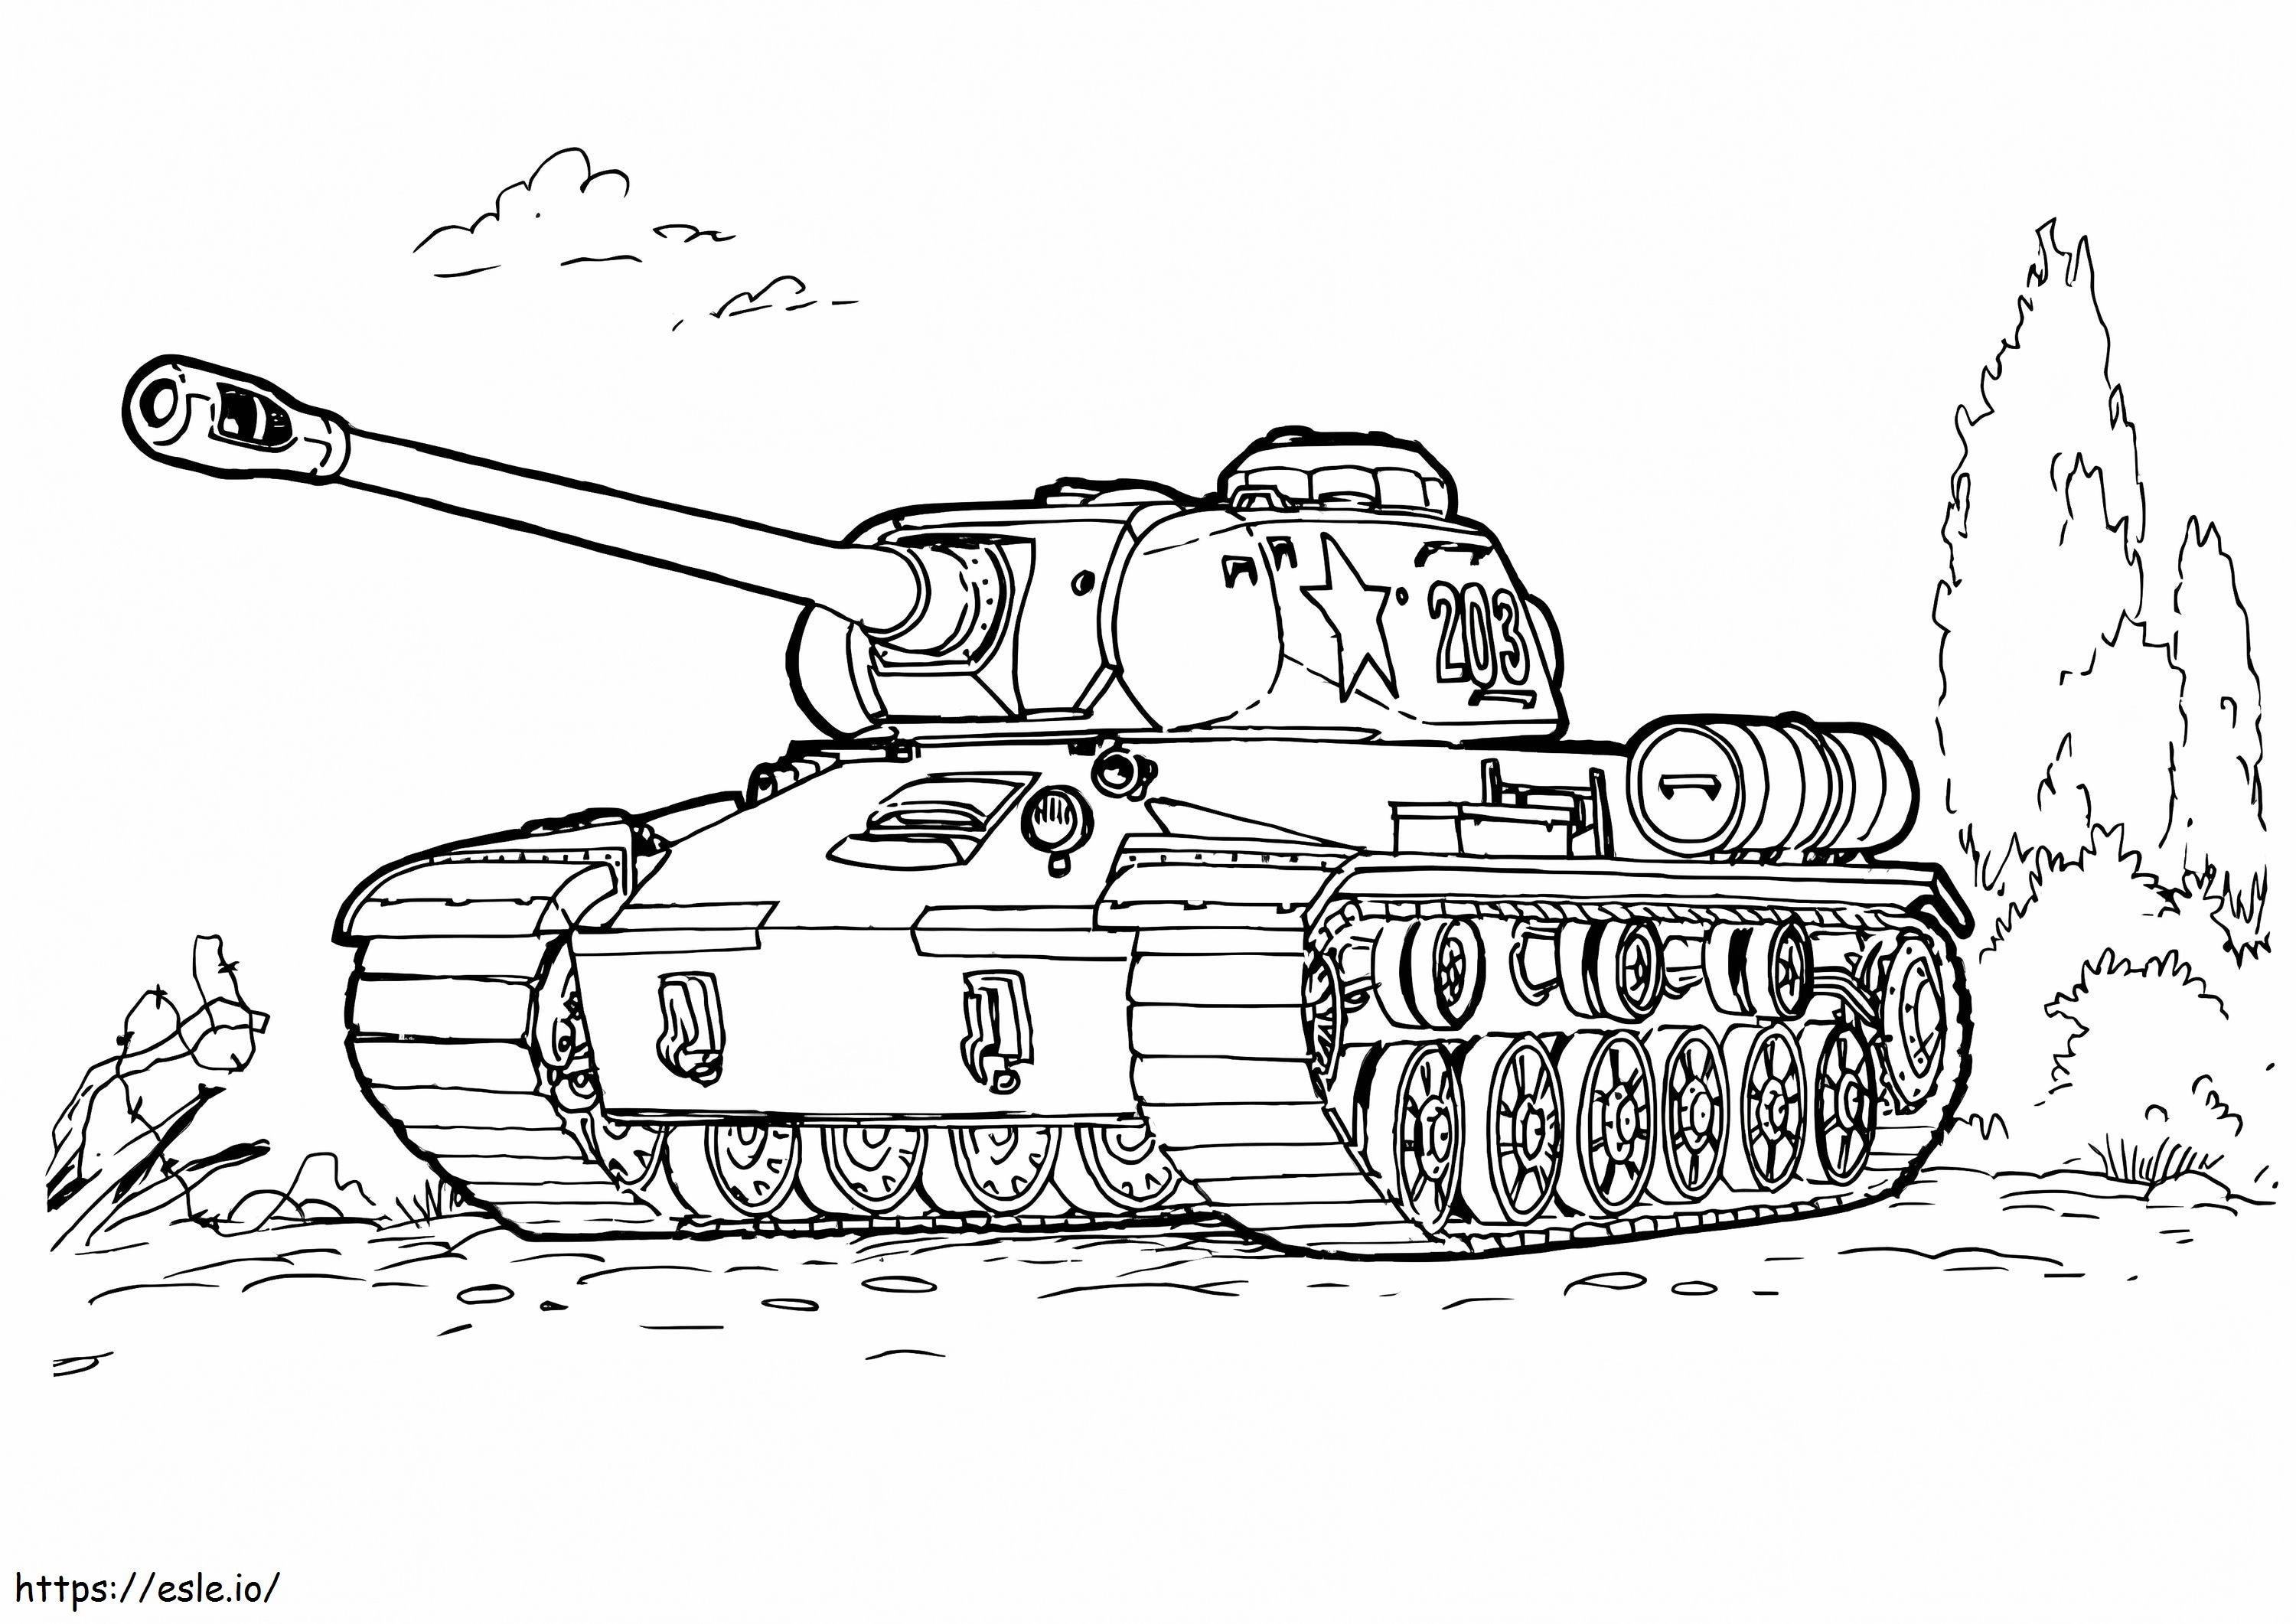 IS 2 重戦車 ぬりえ - 塗り絵